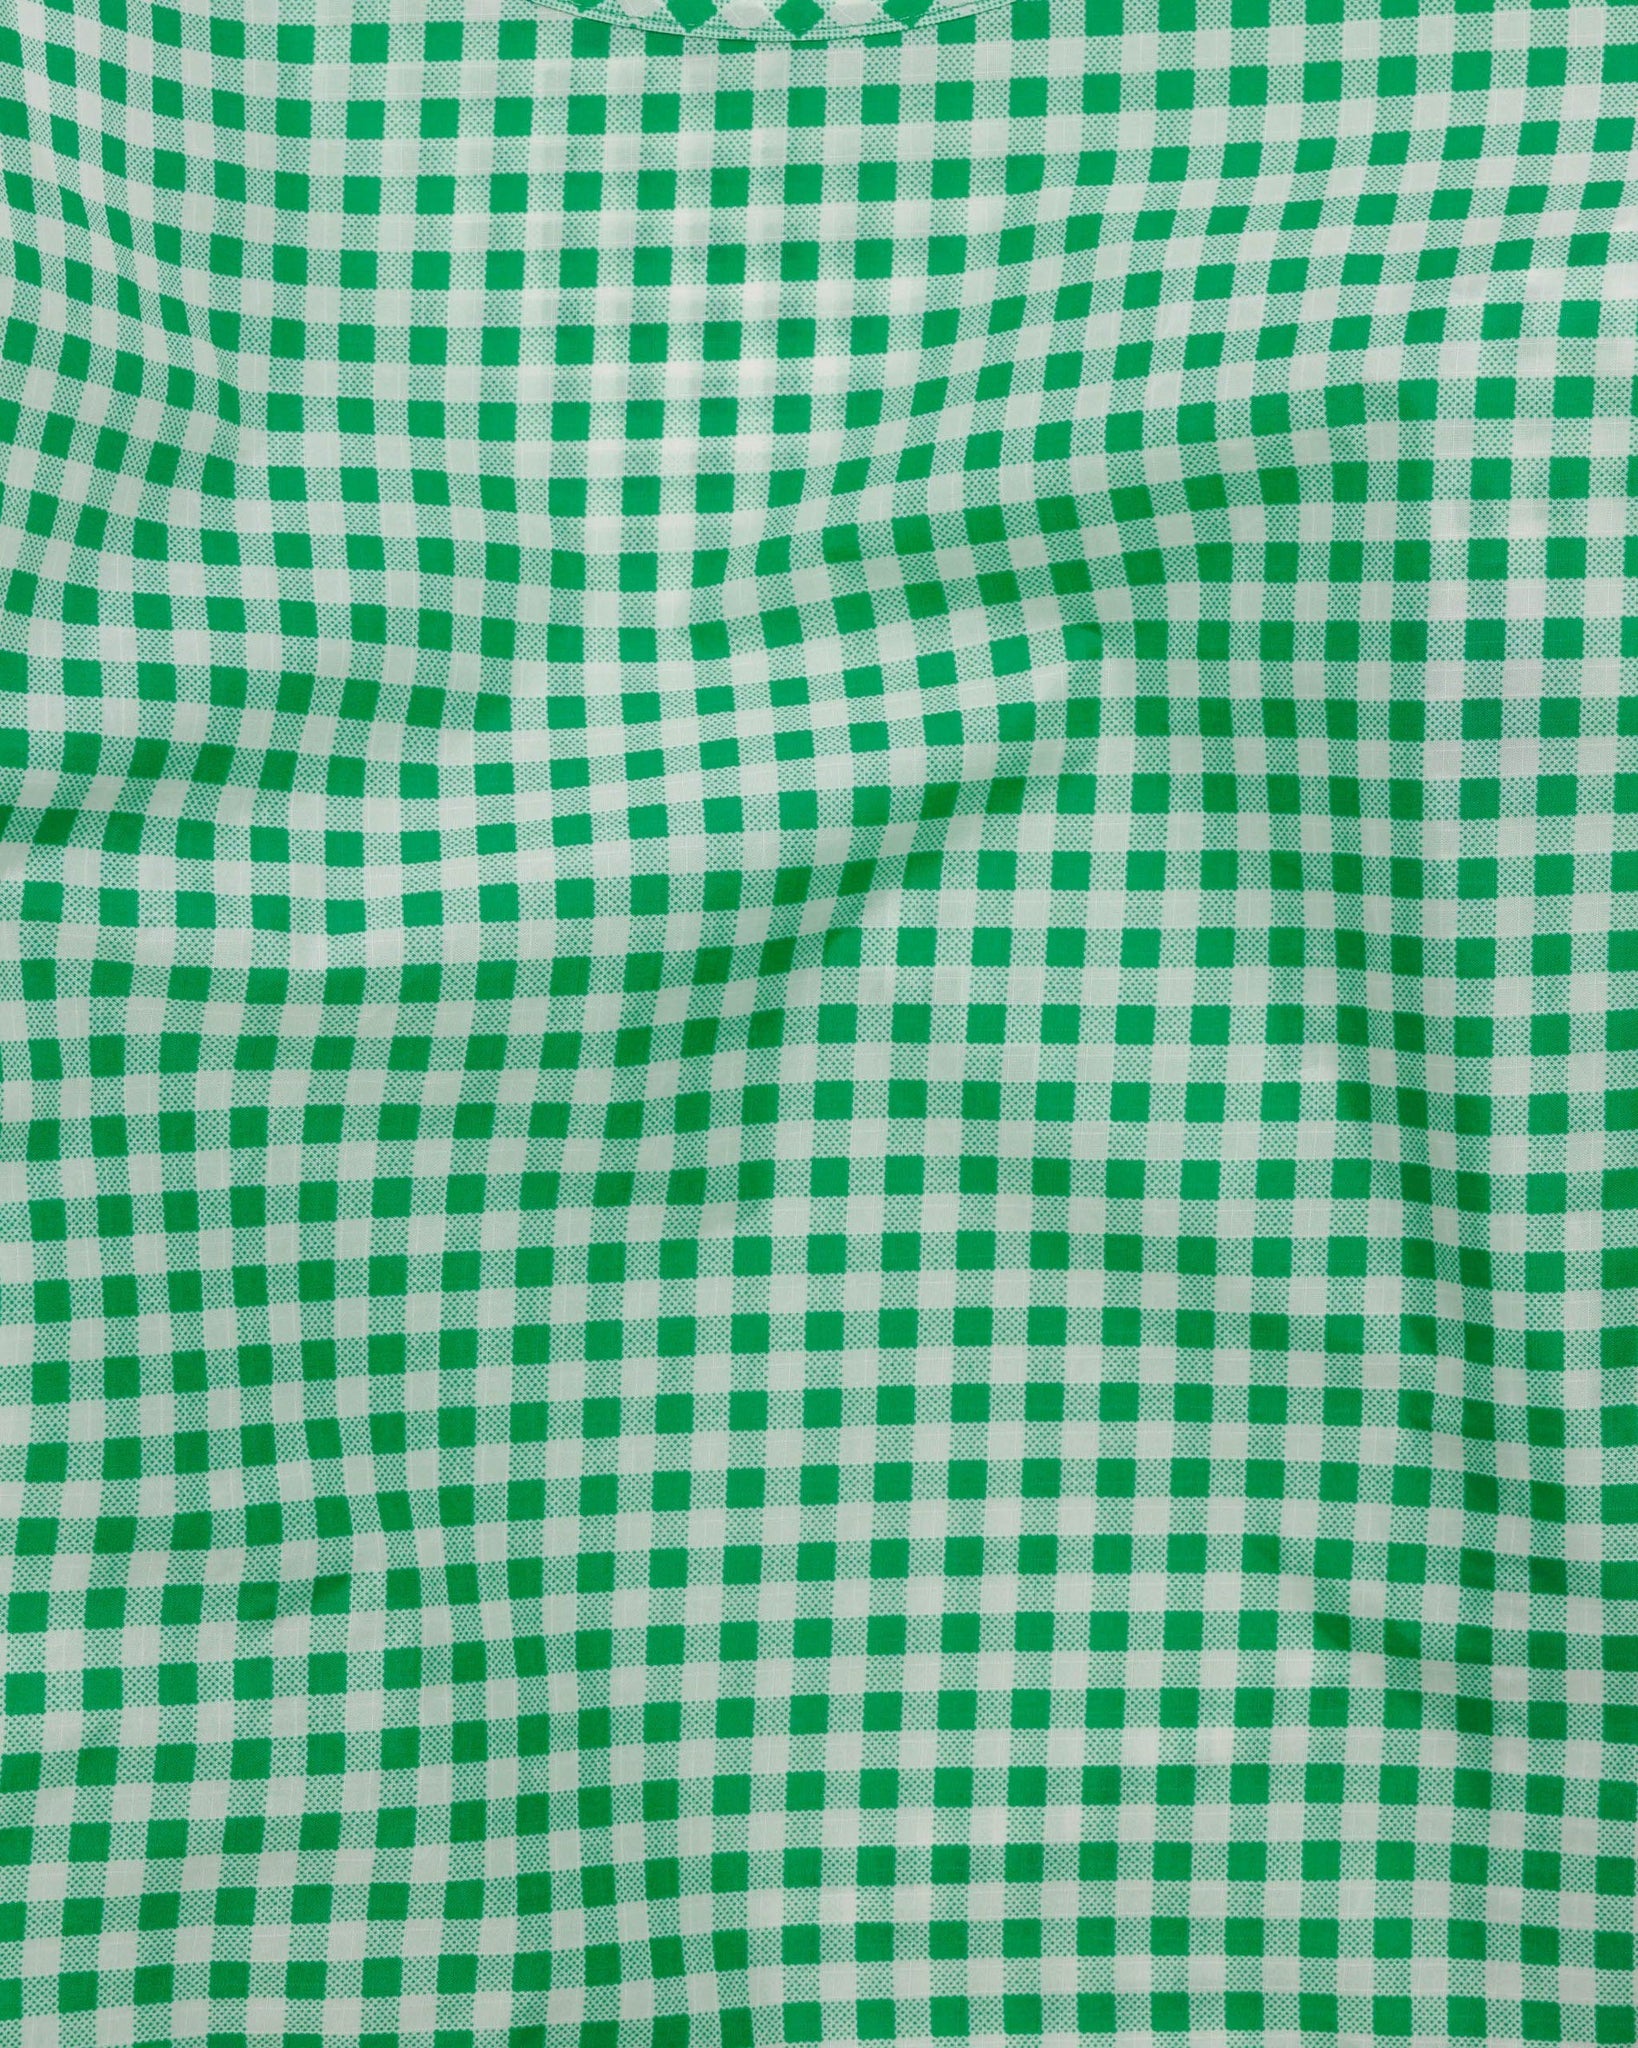 Grüne recycelte Standard-Baggu-Tasche mit Gingham-Karomuster